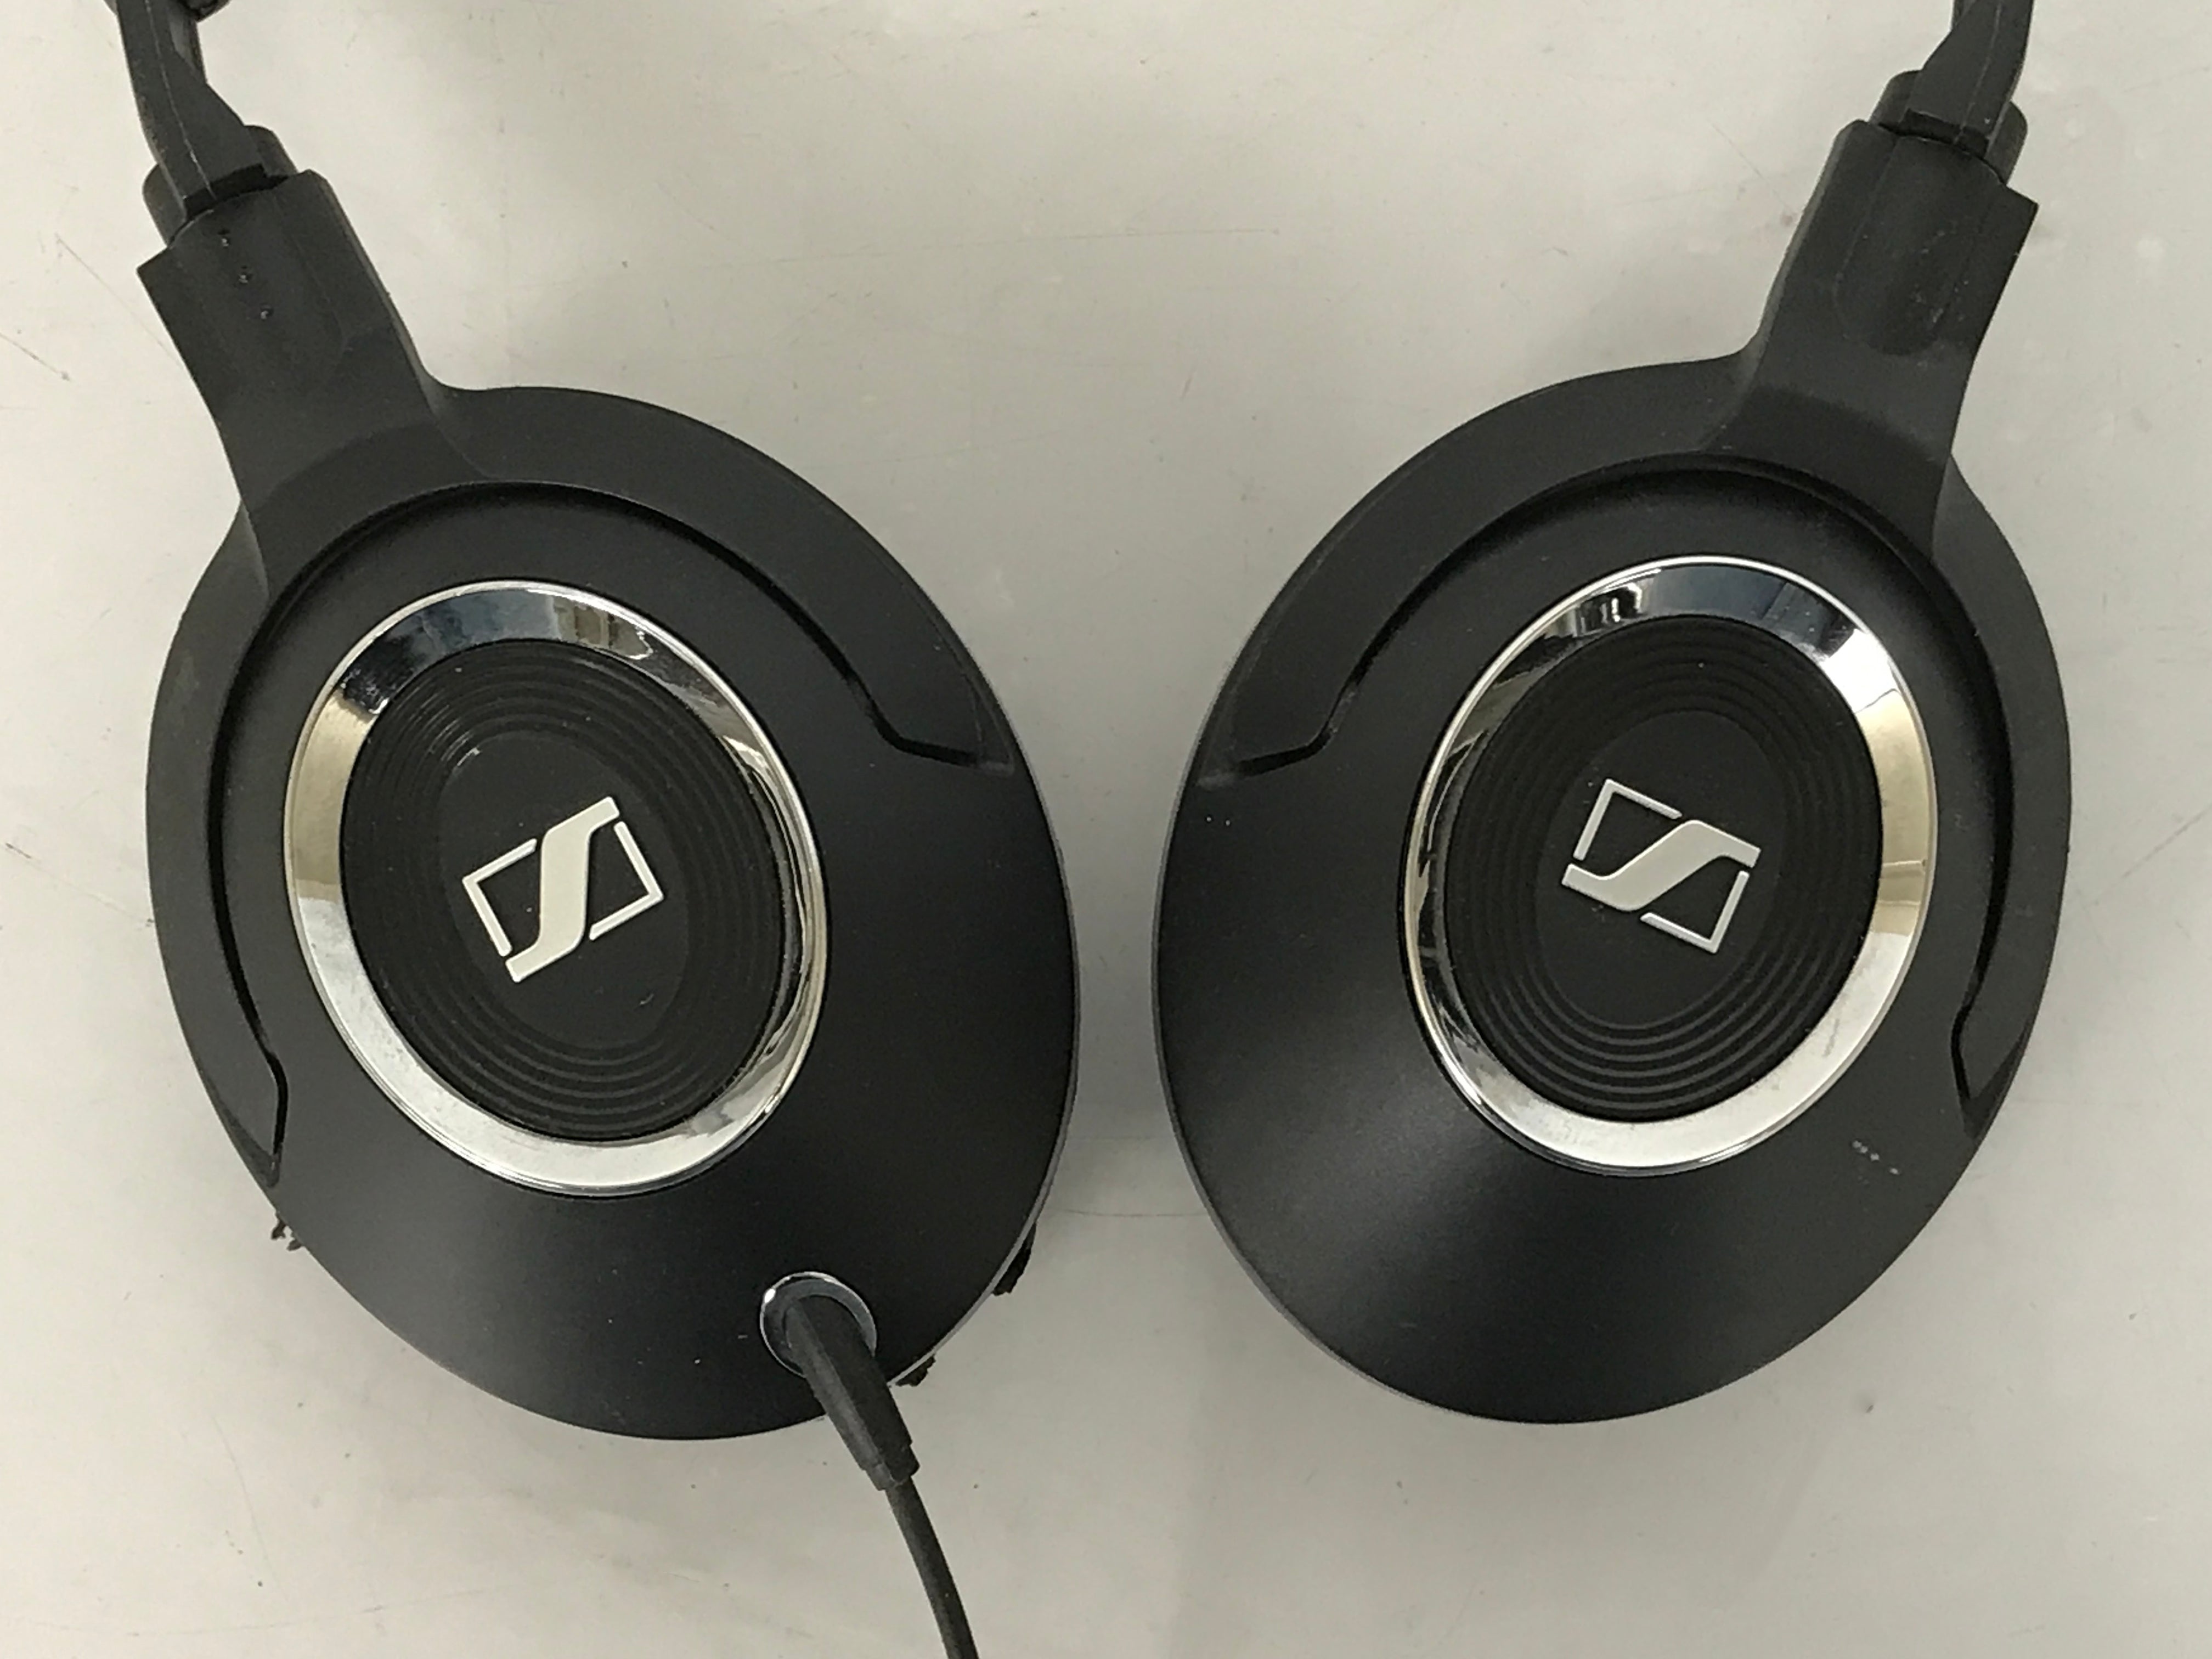 Sennheiser HD 219 On-Ear Stereo Headphones